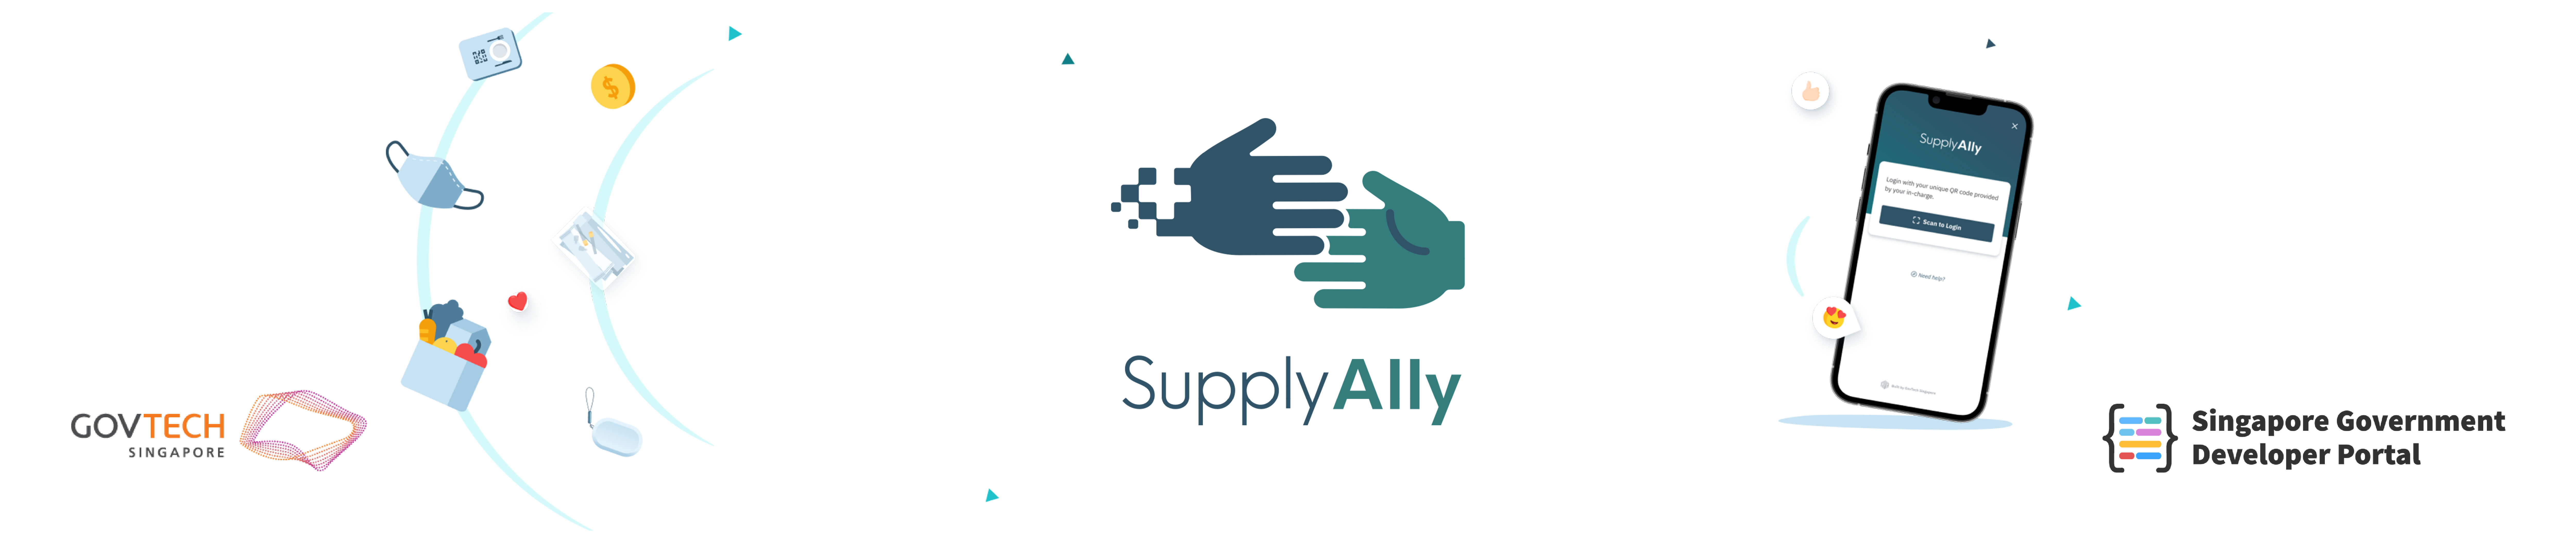 SupplyAlly header banner